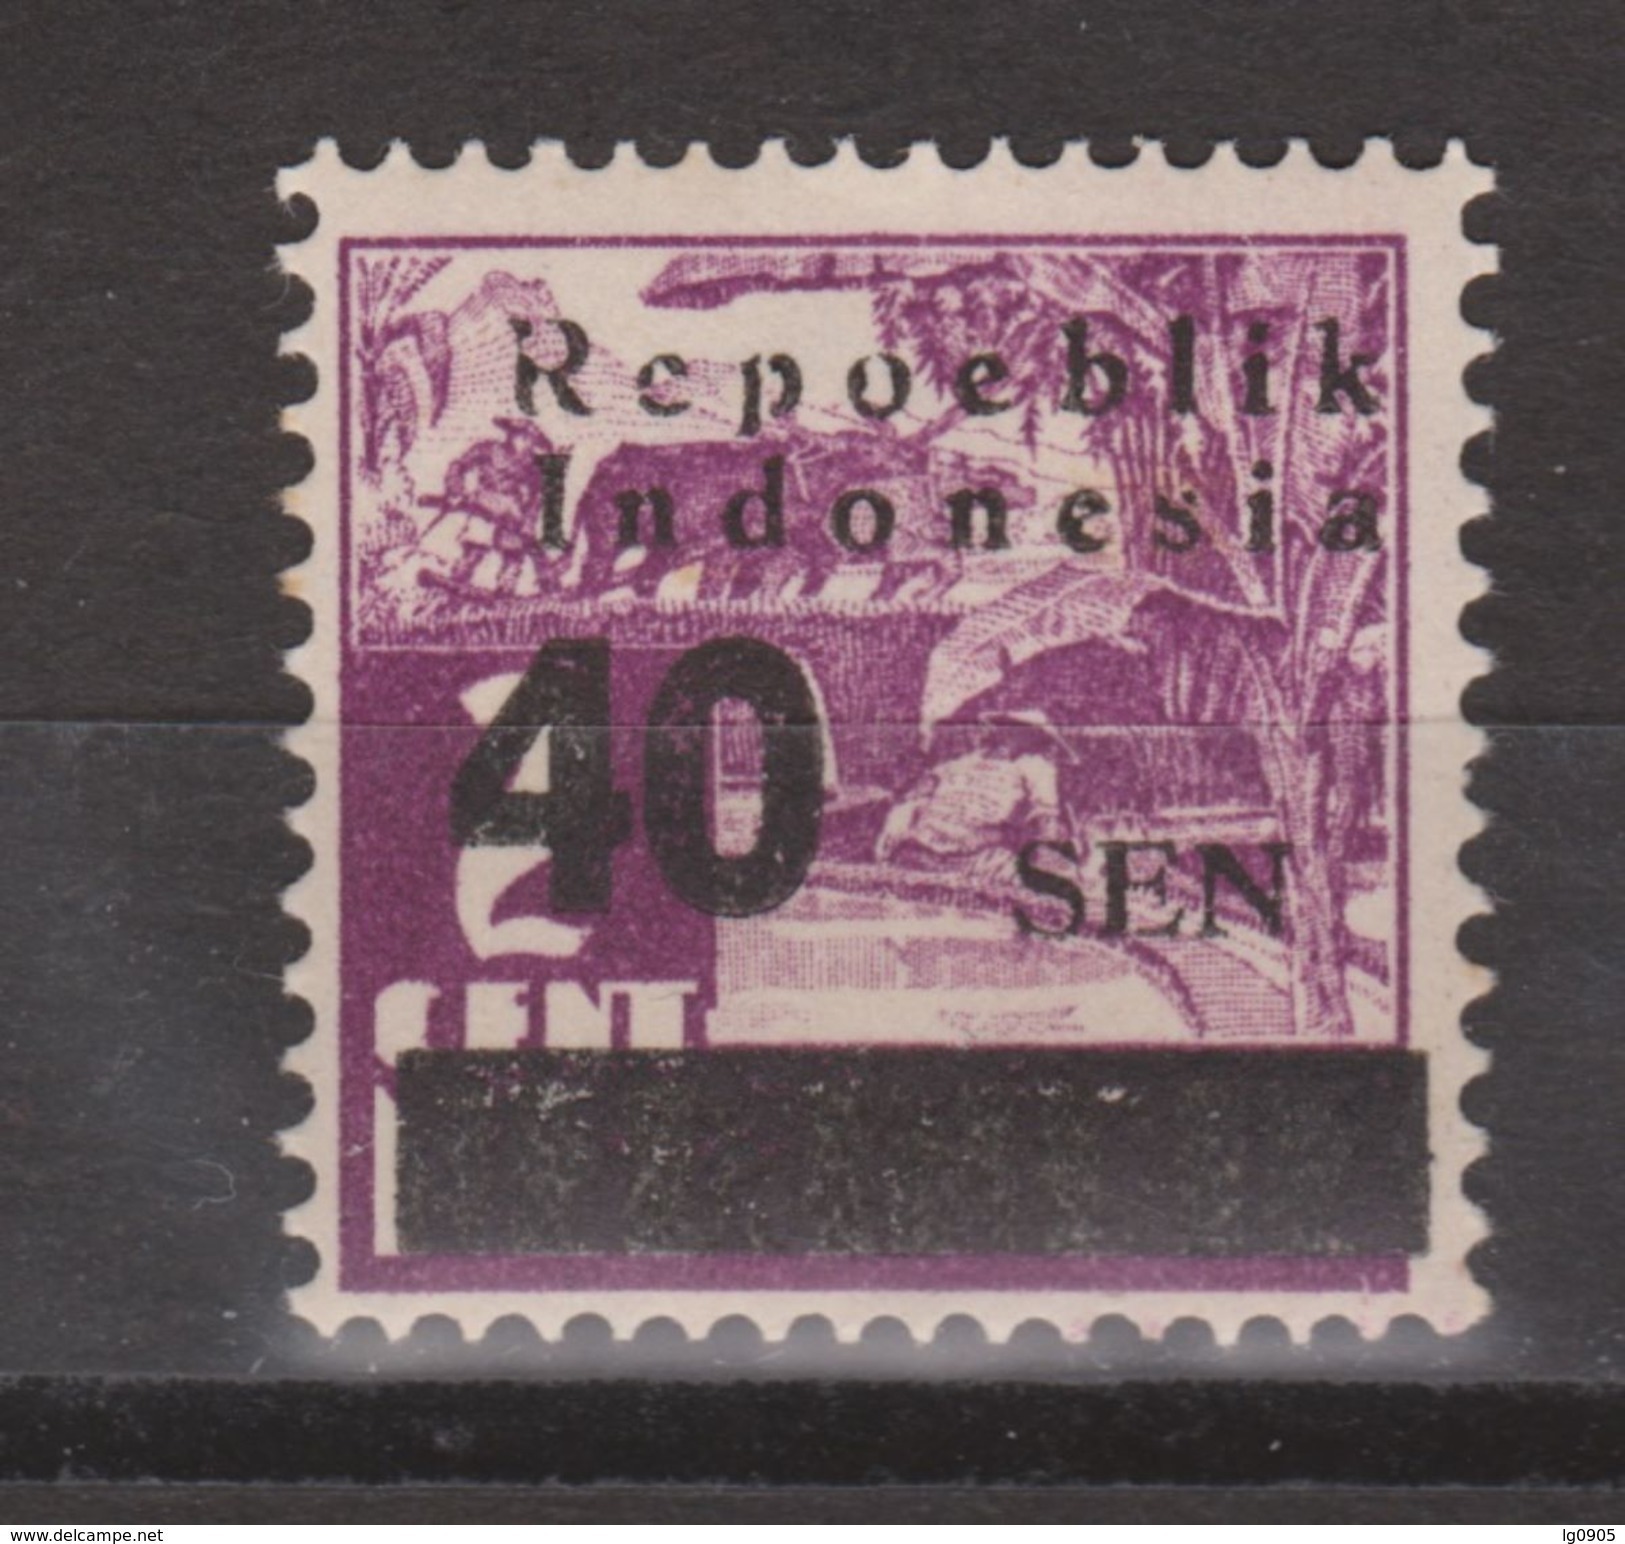 Indonesia Nederlands Indie Dutch Indies Sumatra Nr 1 MNH ; Netherlands Indies Japanese Occupation MEER JAPANSE BEZETTING - Indonesië